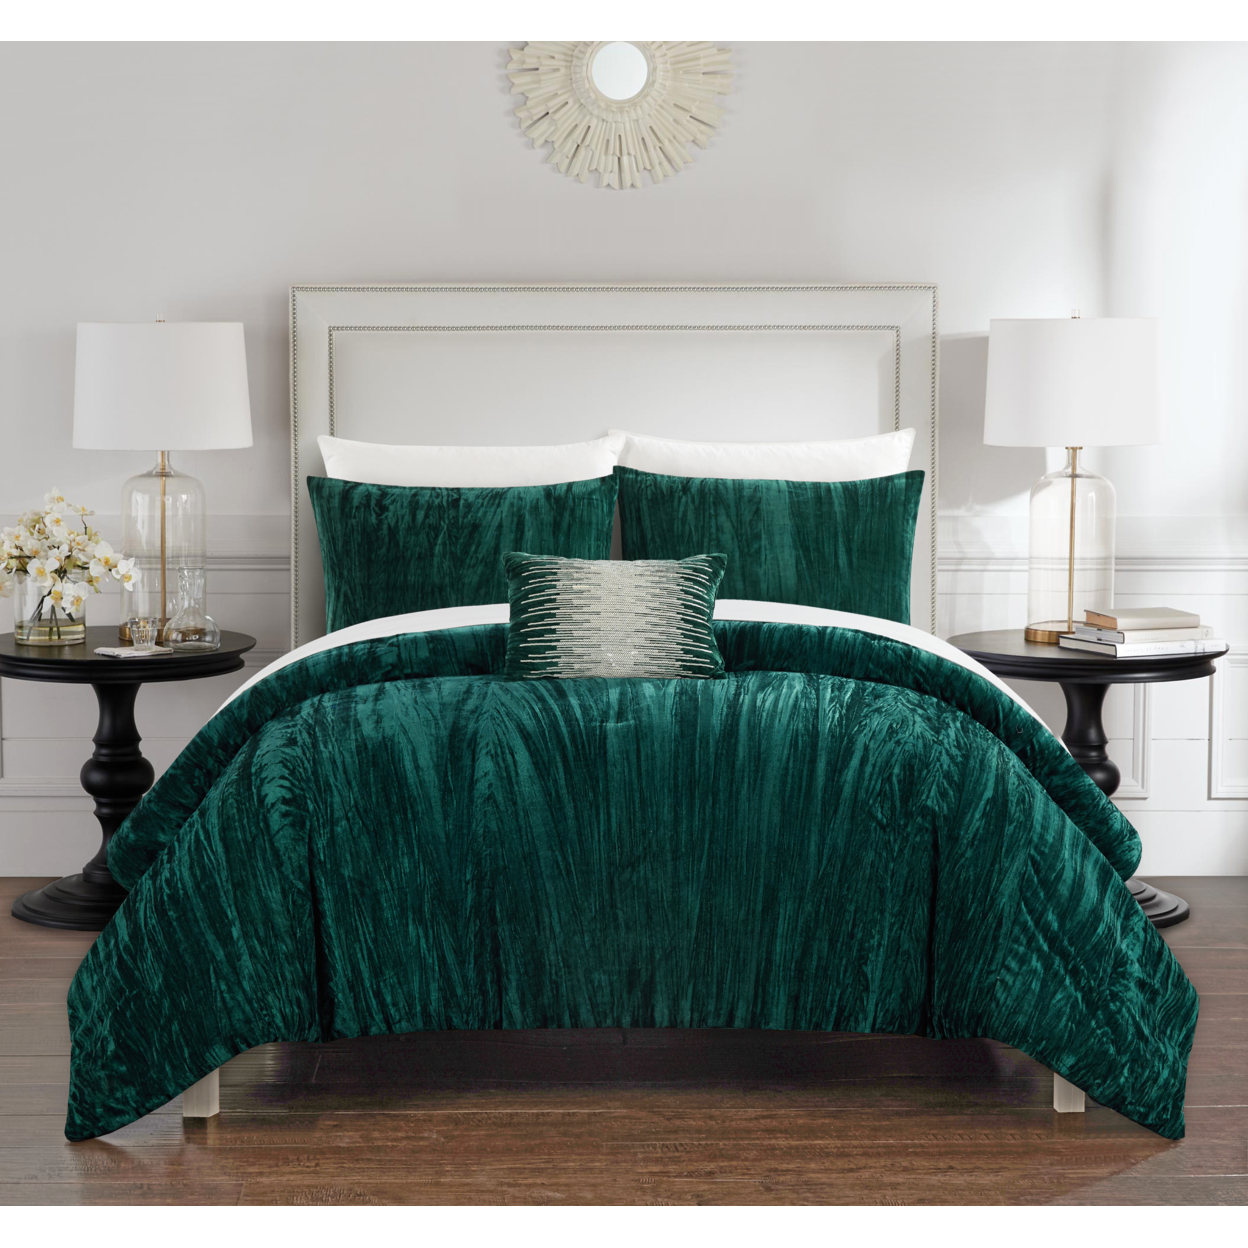 Merieta 4 Piece Comforter Set Crinkle Crushed Velvet Bedding - Decorative Pillow Shams Included - Grey, King